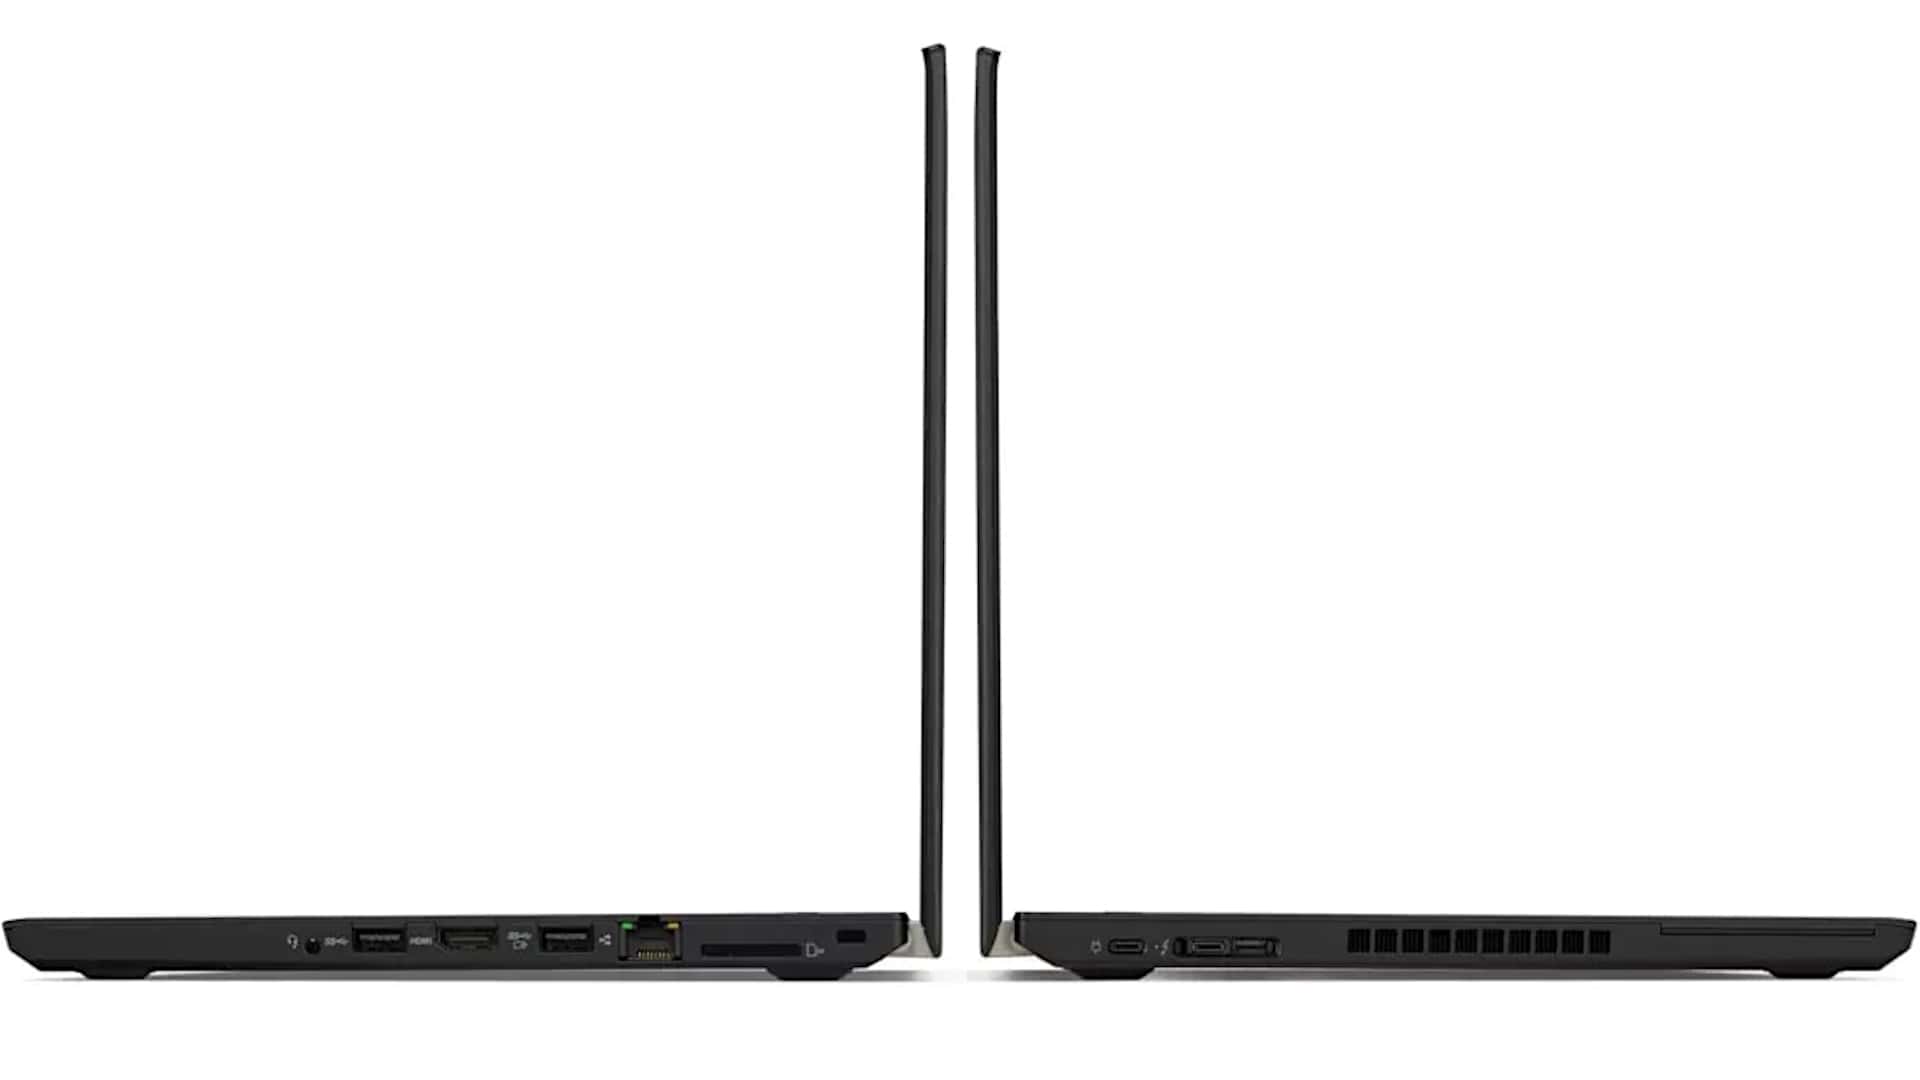 Lenovo ThinkPad T480 Sides Ports